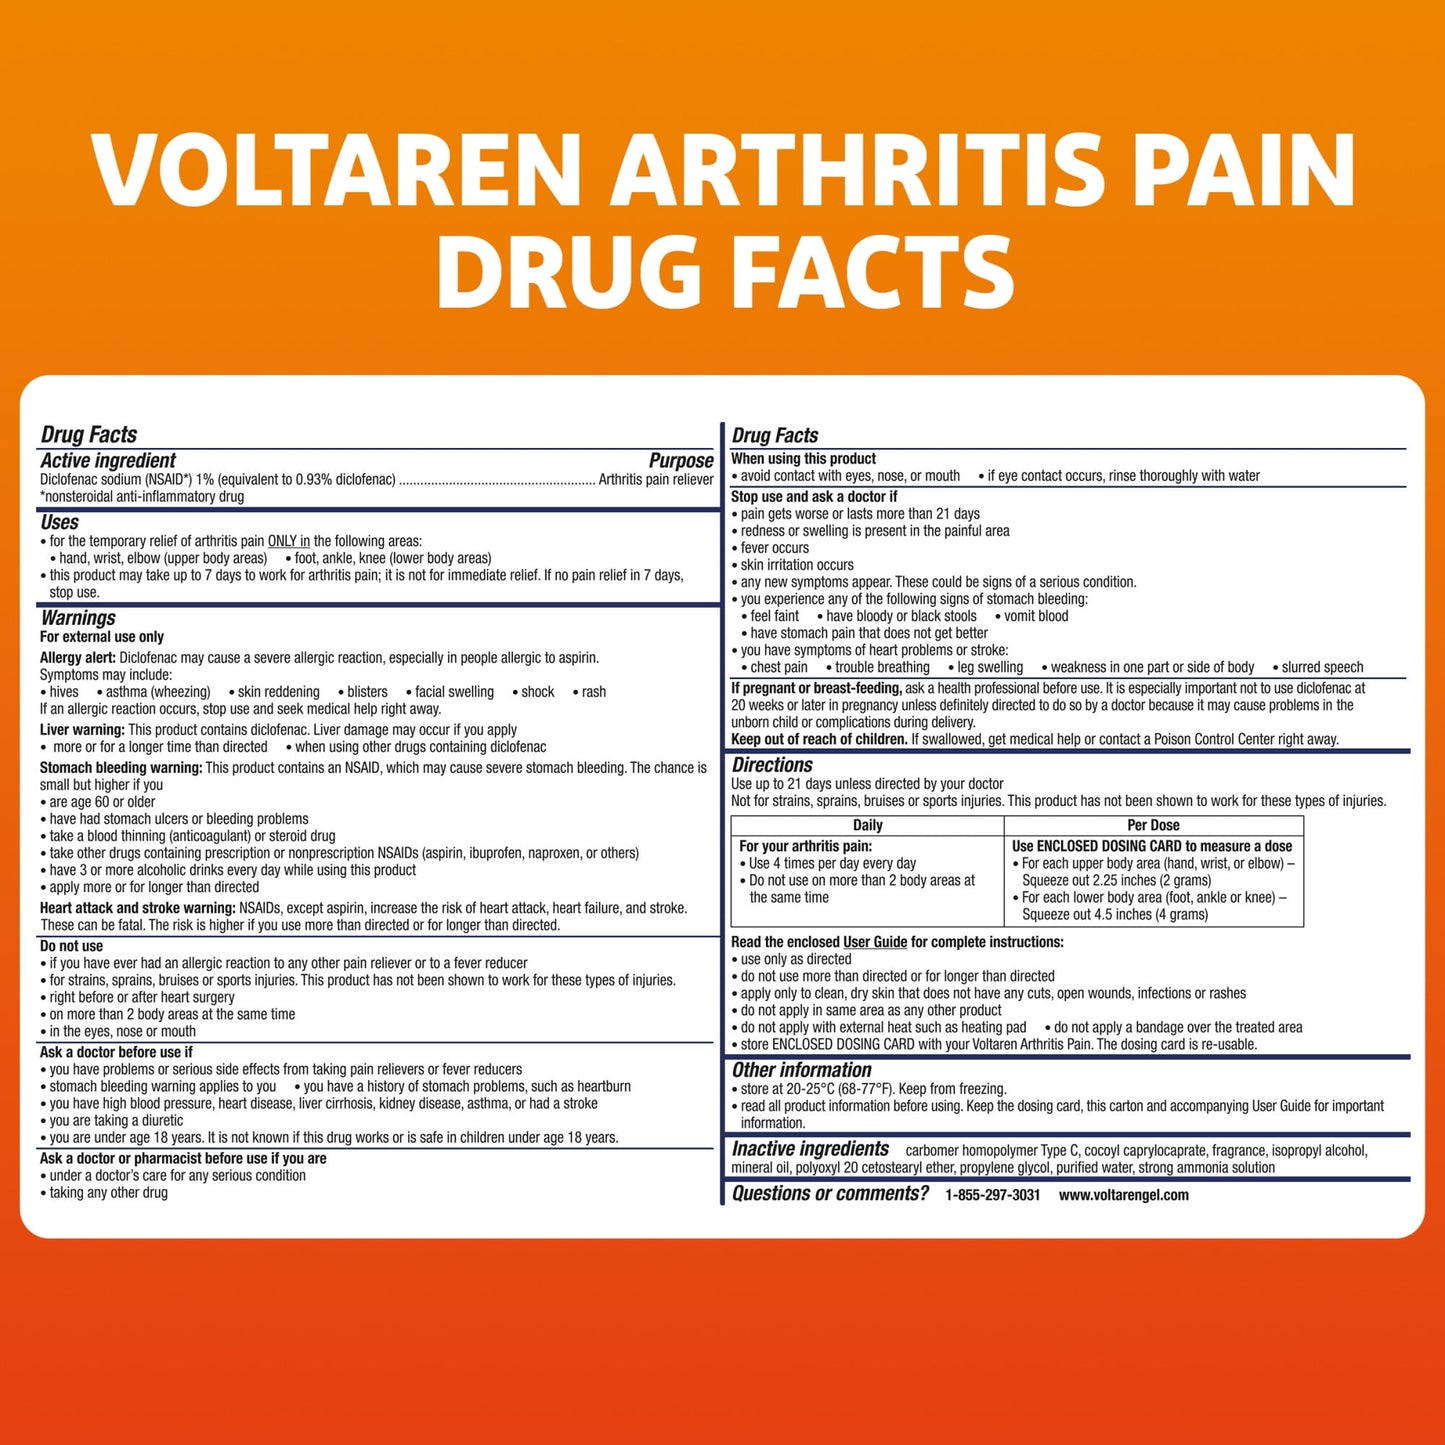 Voltaren Topical Arthritis Medicine Gel Pain Reliever for Arthritis, 1.7 Oz